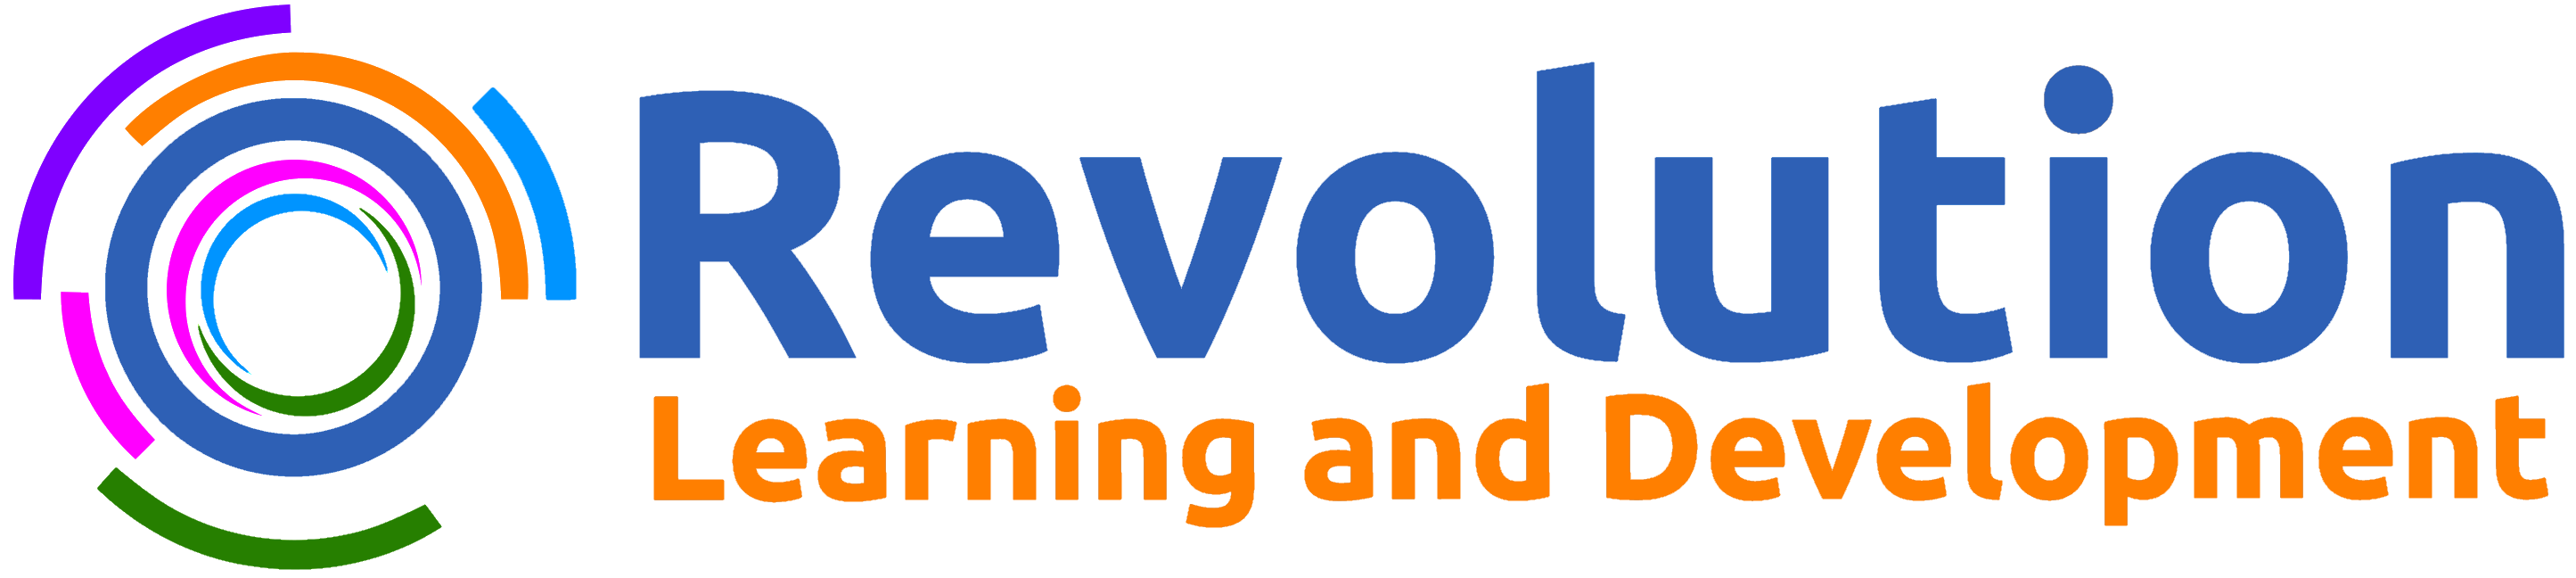 Revolution Learning and Development – Romania